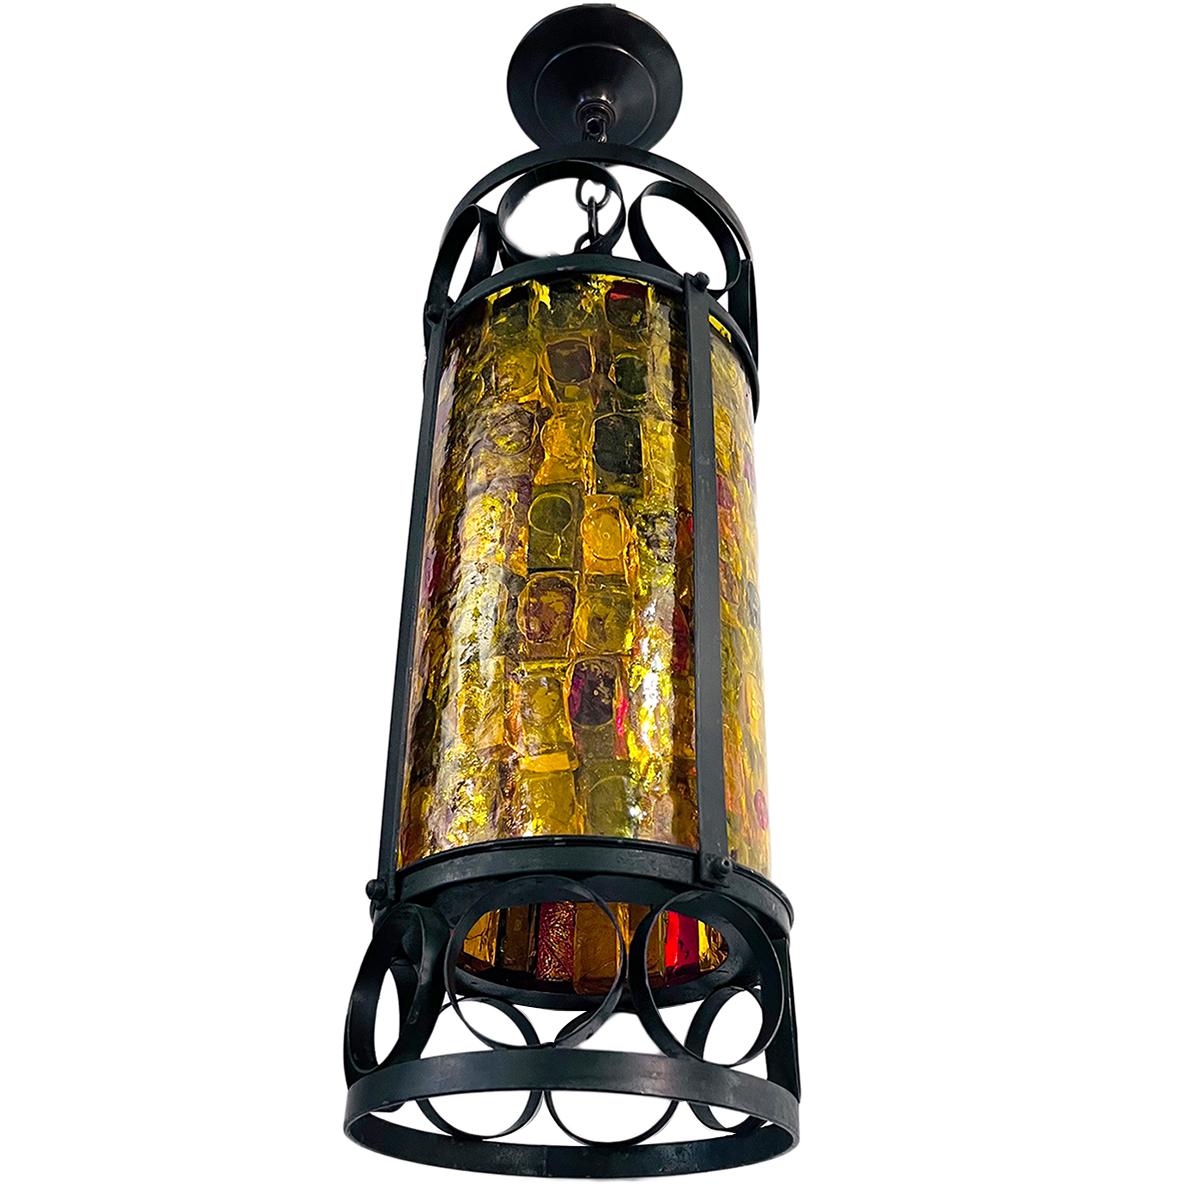 Pair of circa 1950s Italian molded glass lantern with 3 interior lights.

Measurements:
Present drop: 30